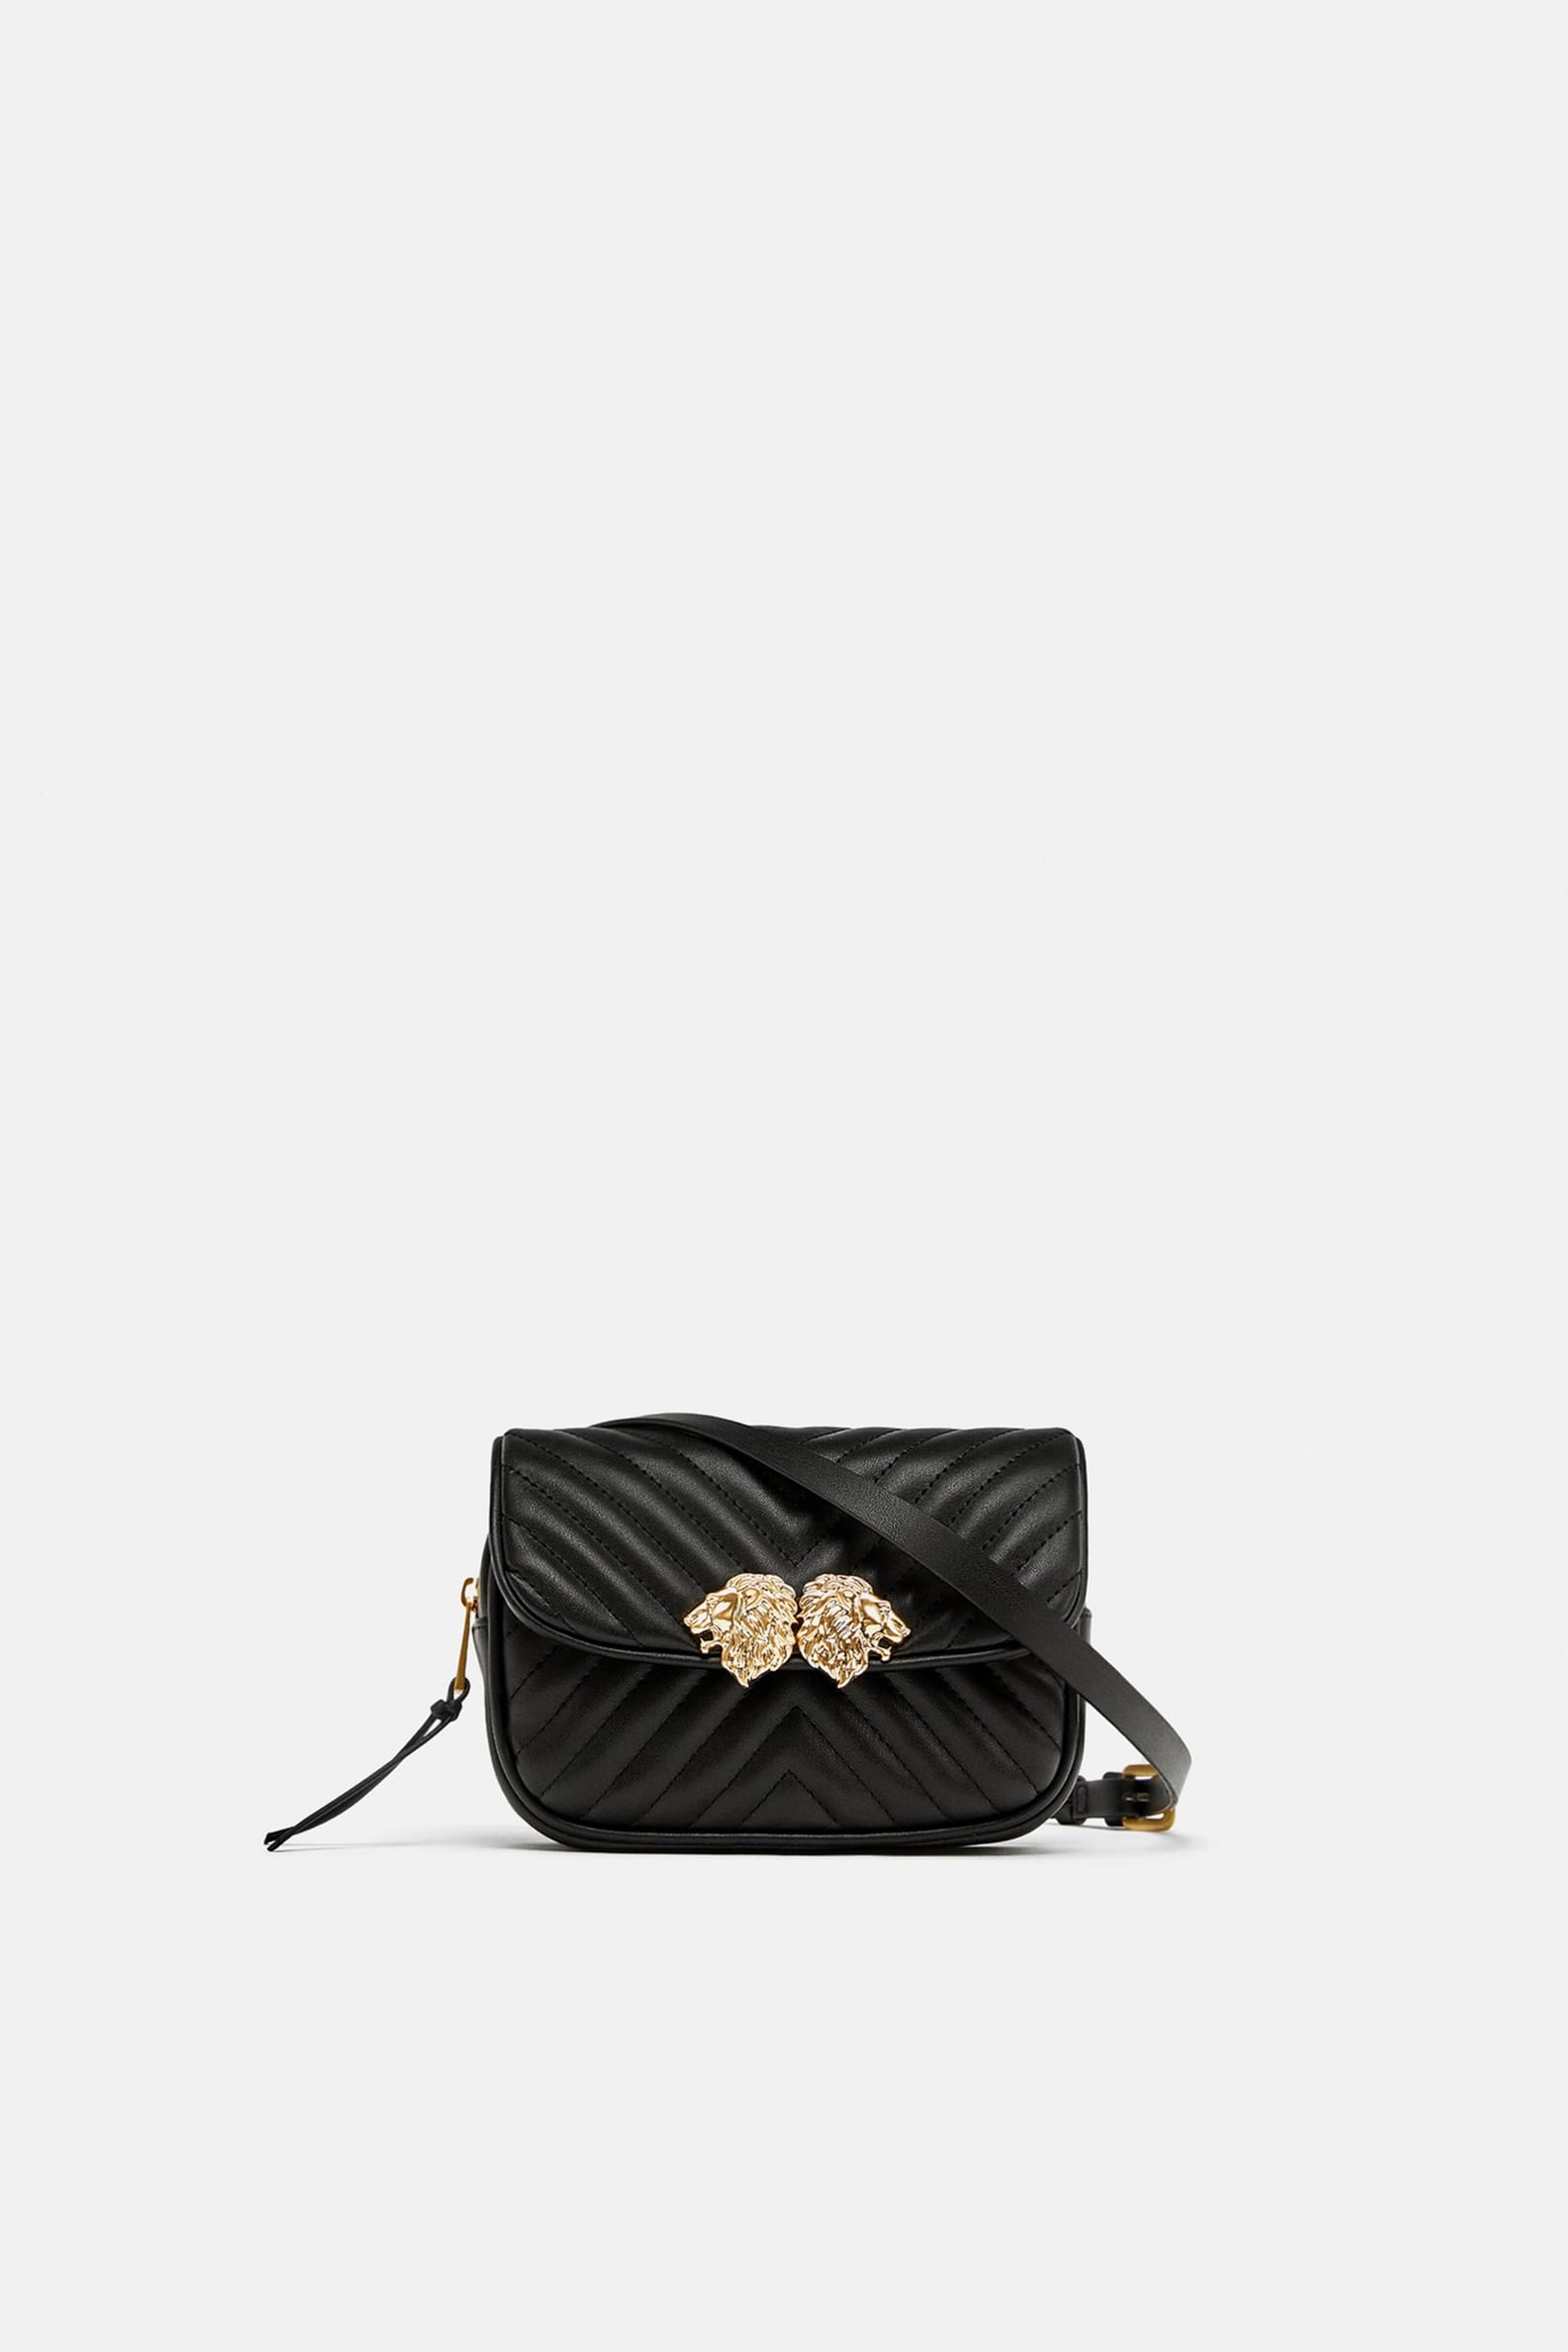 Amal Clooney's Black Alexander McQueen Bag | POPSUGAR Fashion